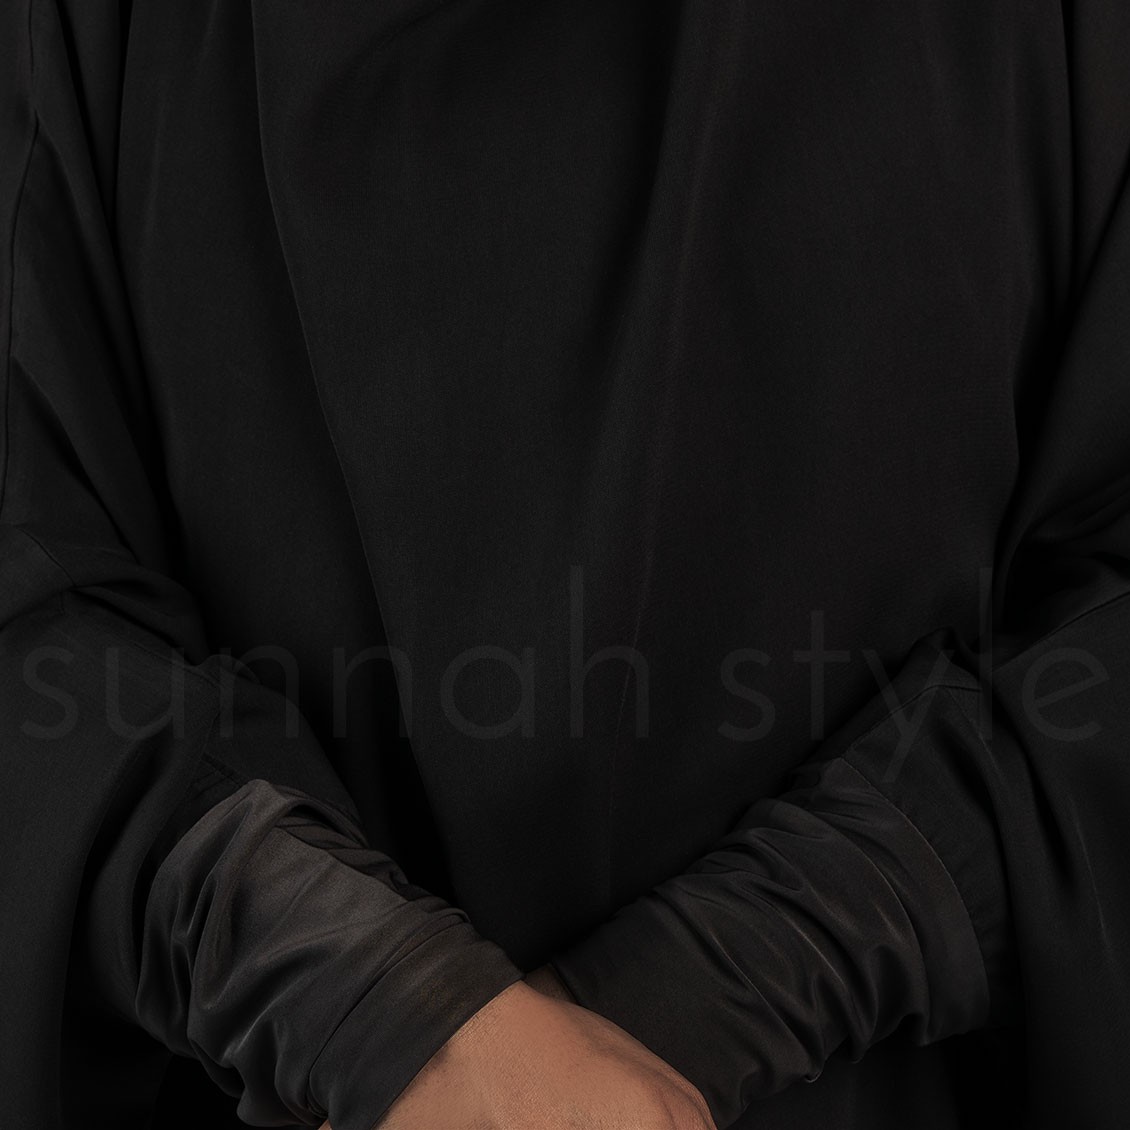 Sunnah Style Plain Jilbab Top Knee Length Black